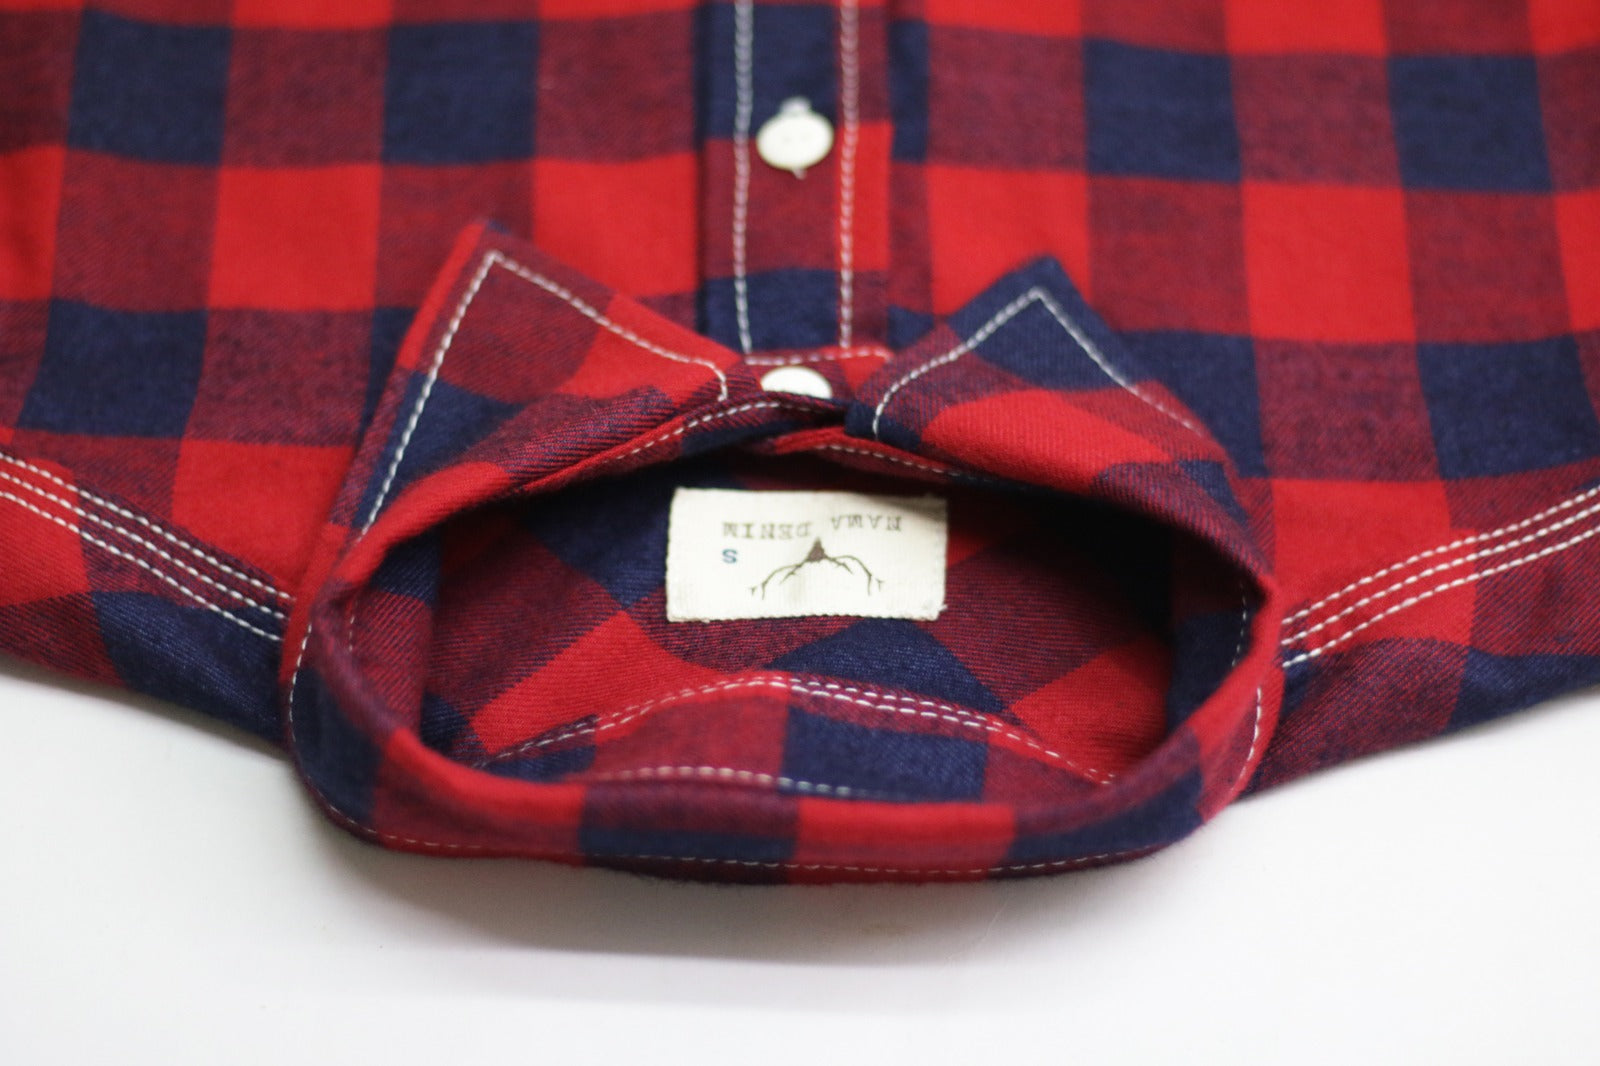 Nama Denim Buffalo Check Flannel Work Shirt (Red/Blue) M